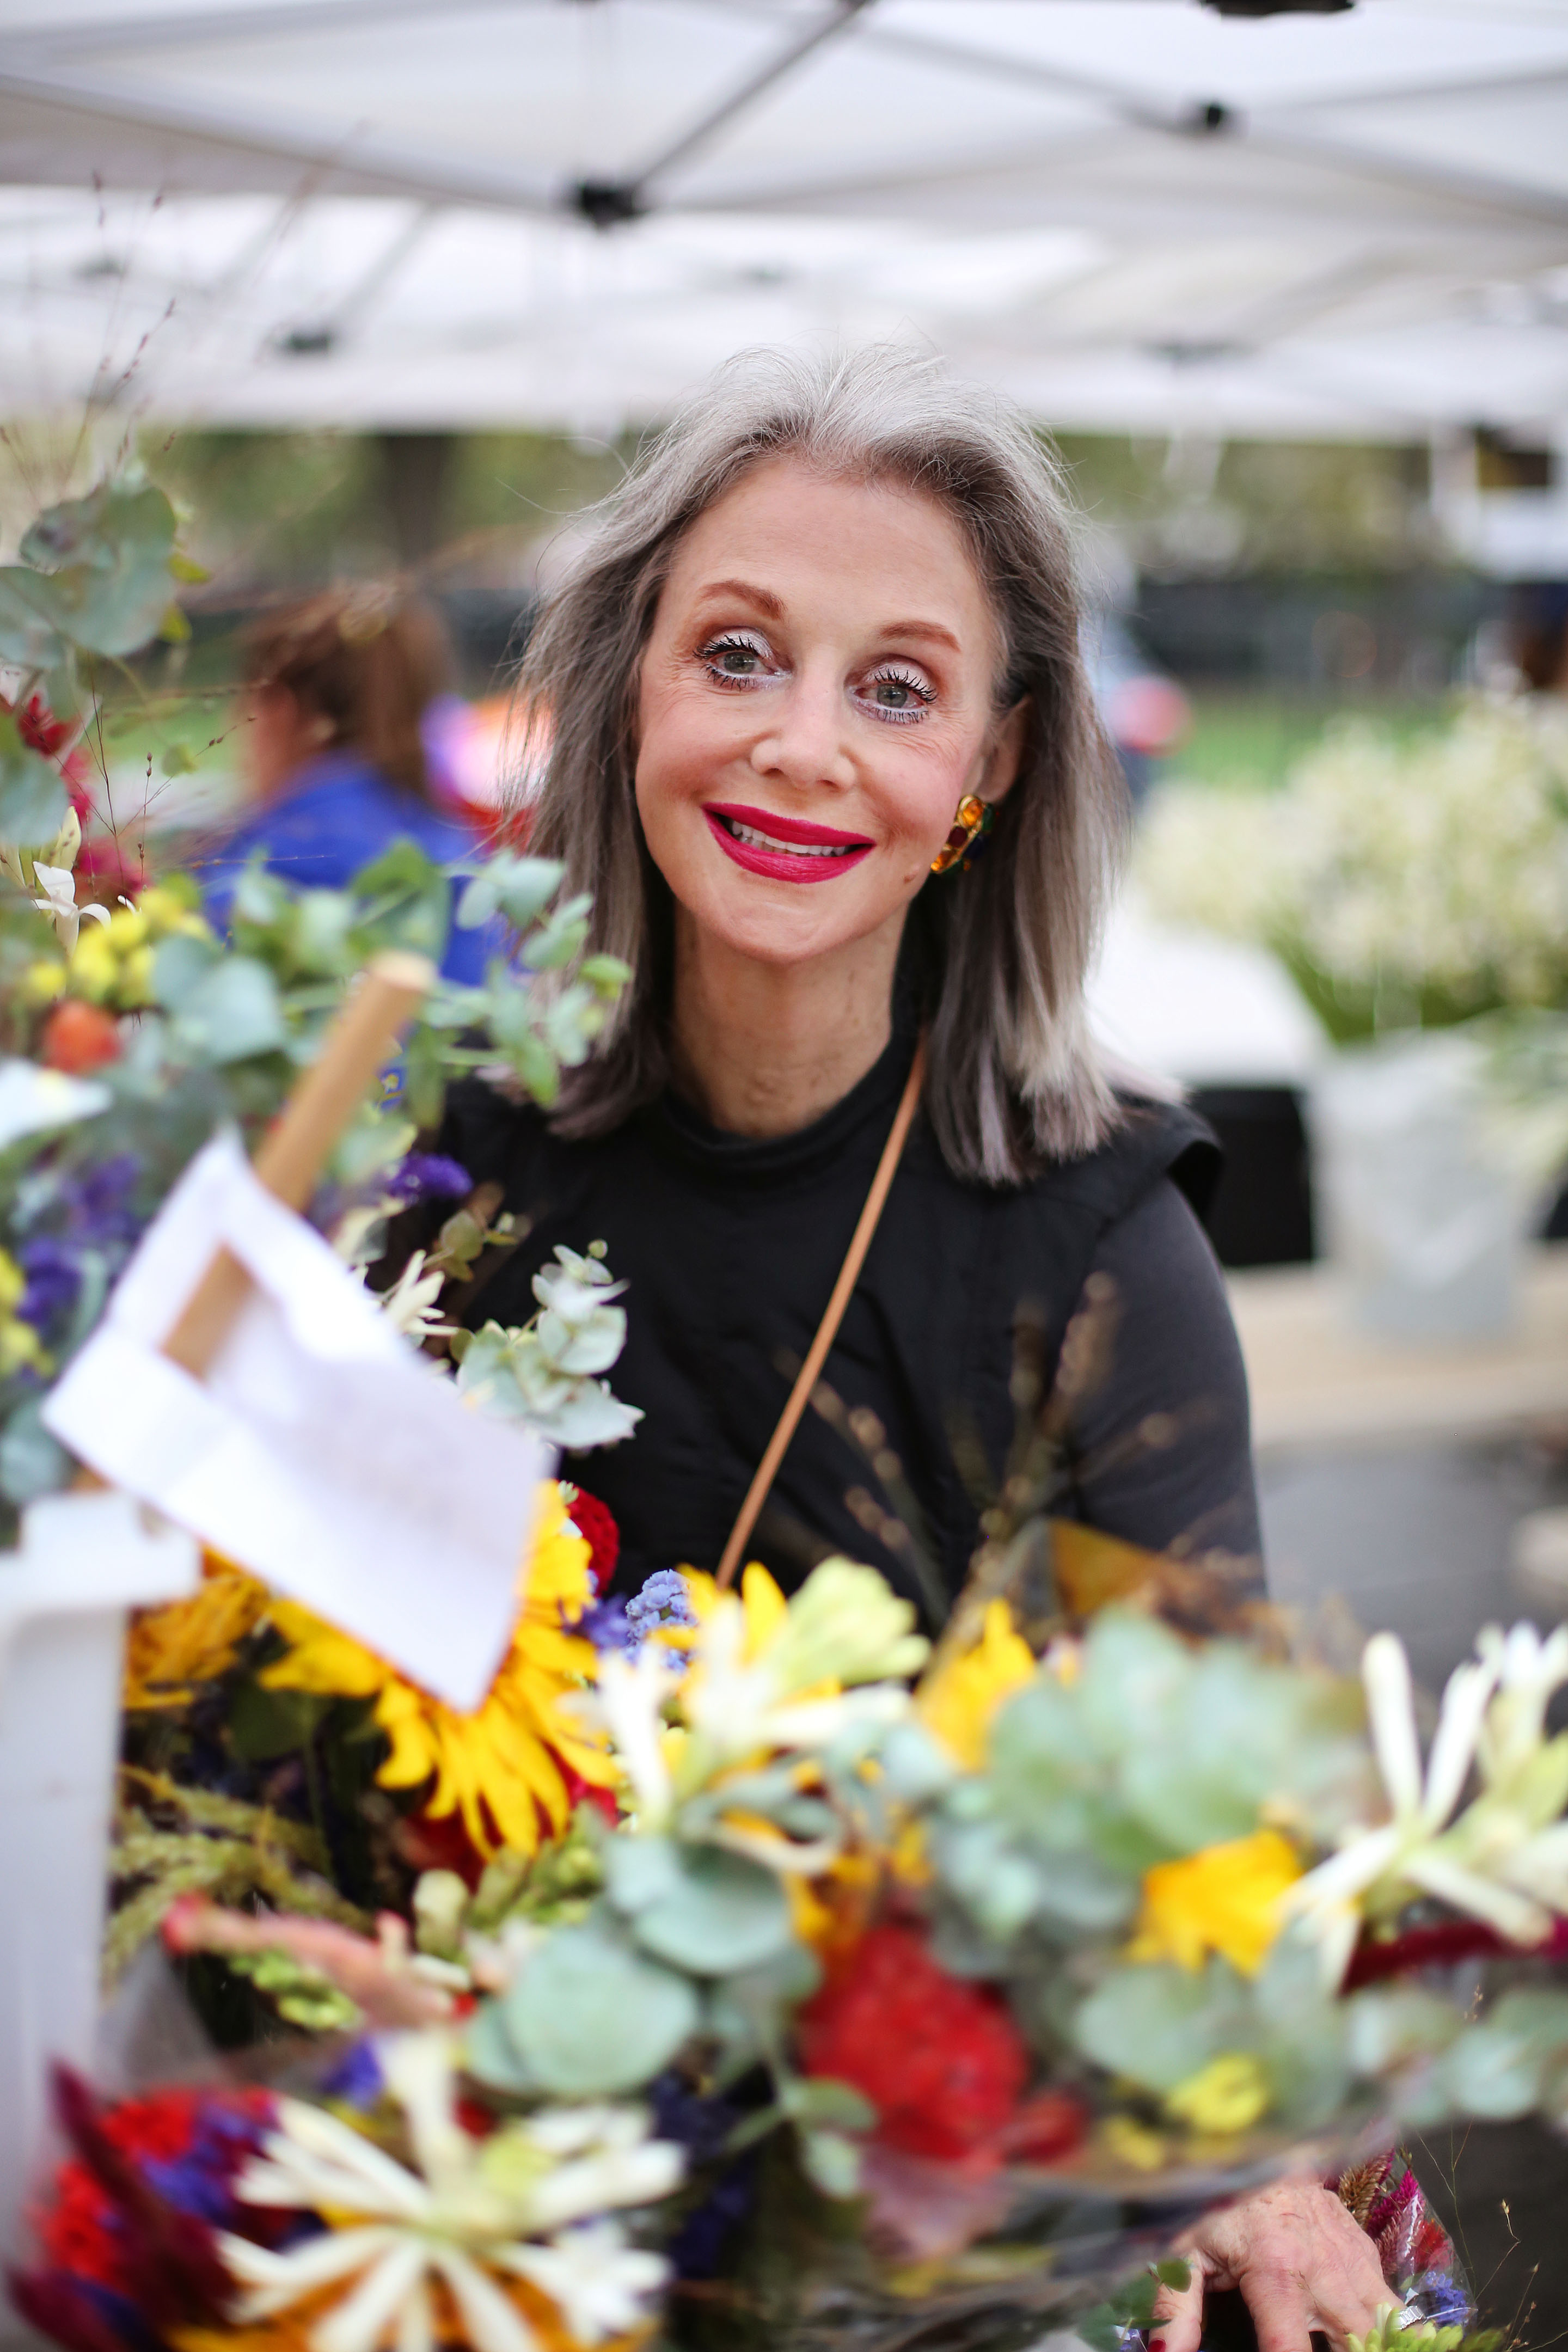 Positivity Through Flowers at the Farmer's Market